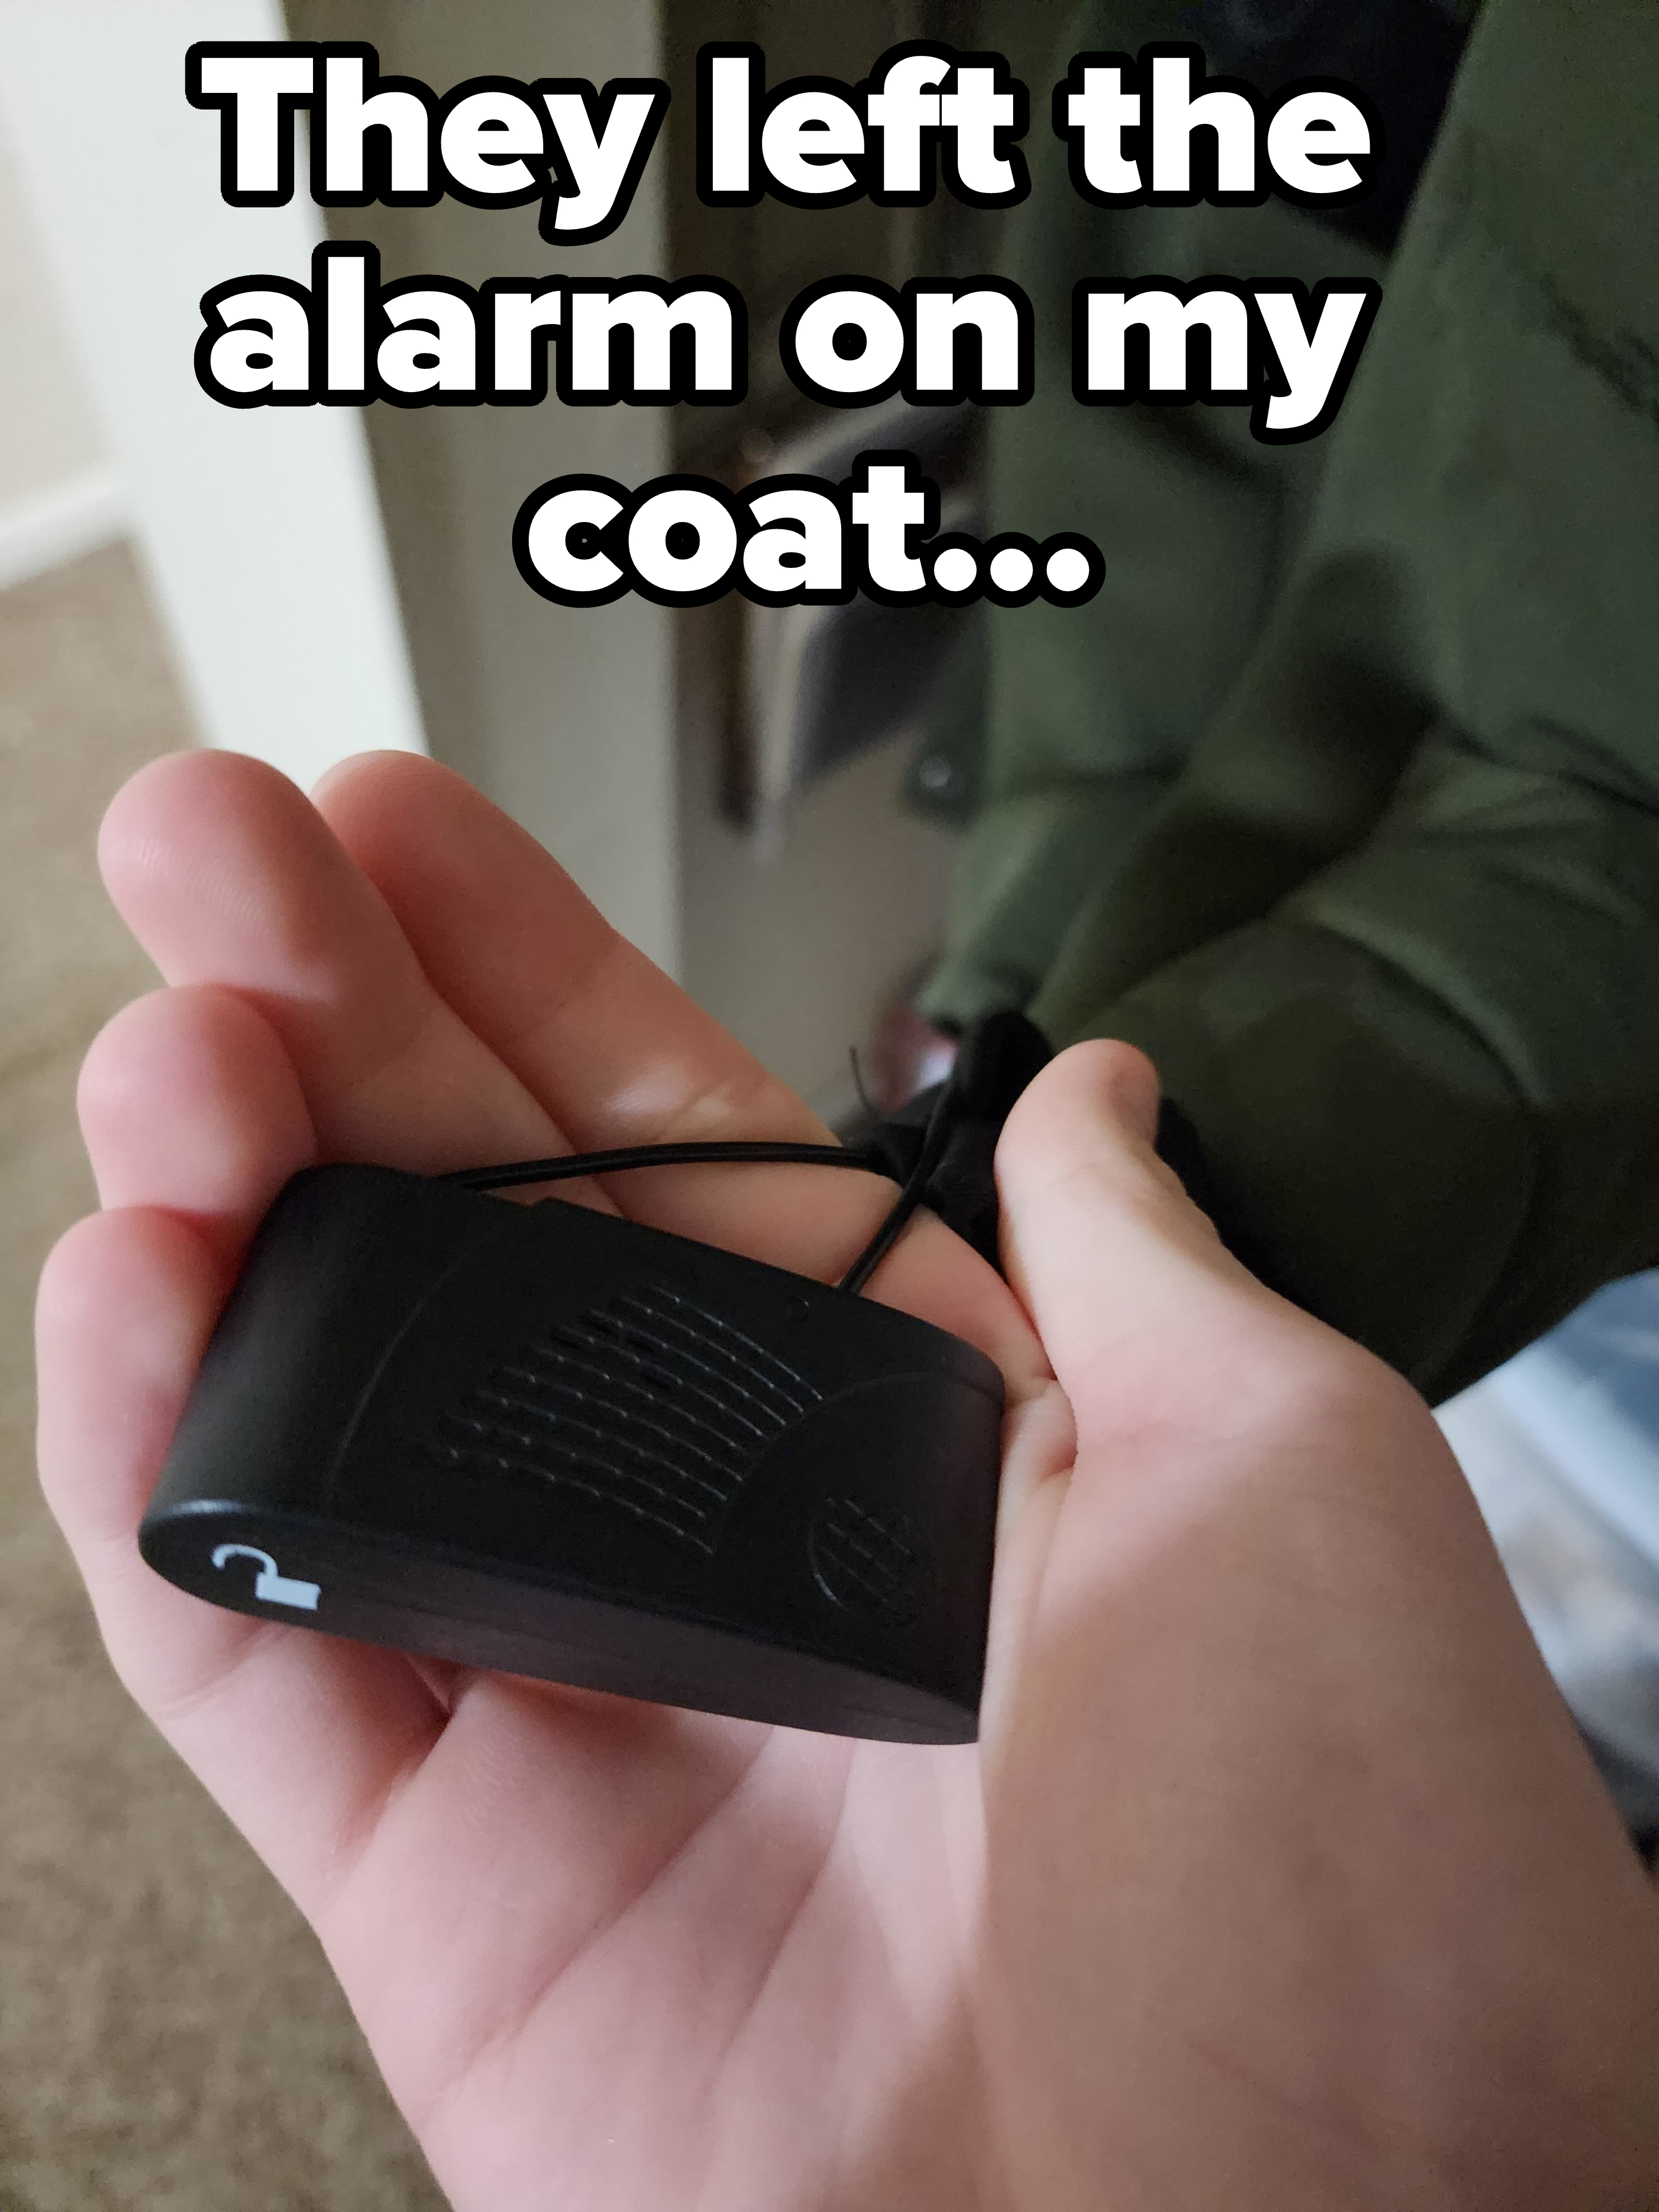 &quot;They left the alarm on my coat...&quot;